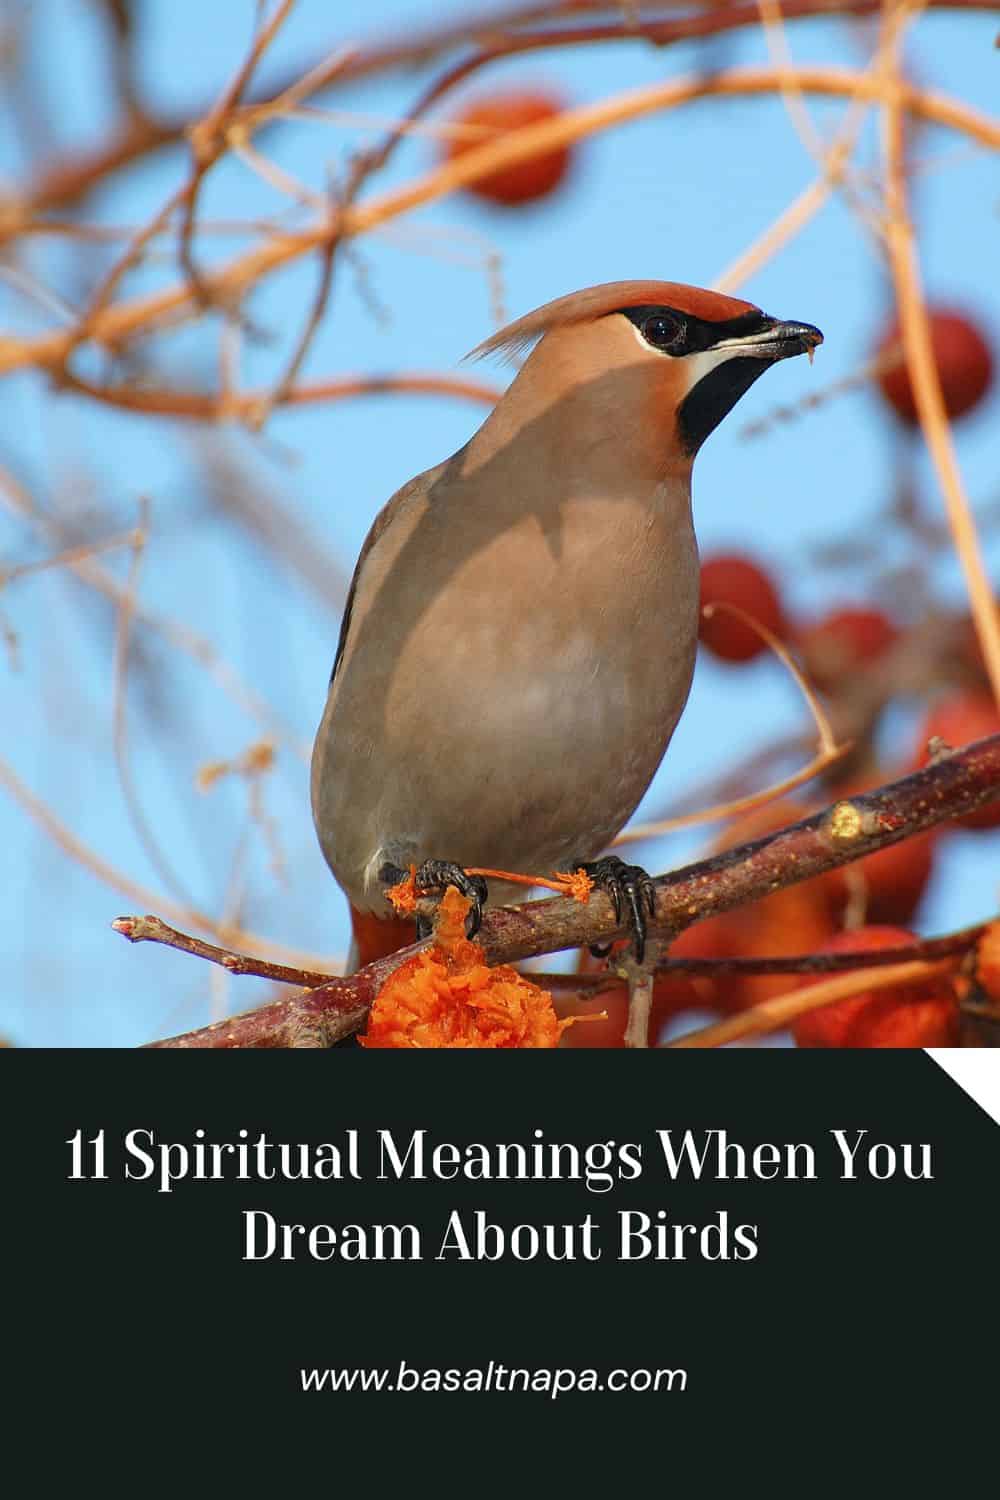 Spiritual Meanings of Birds in Dreams